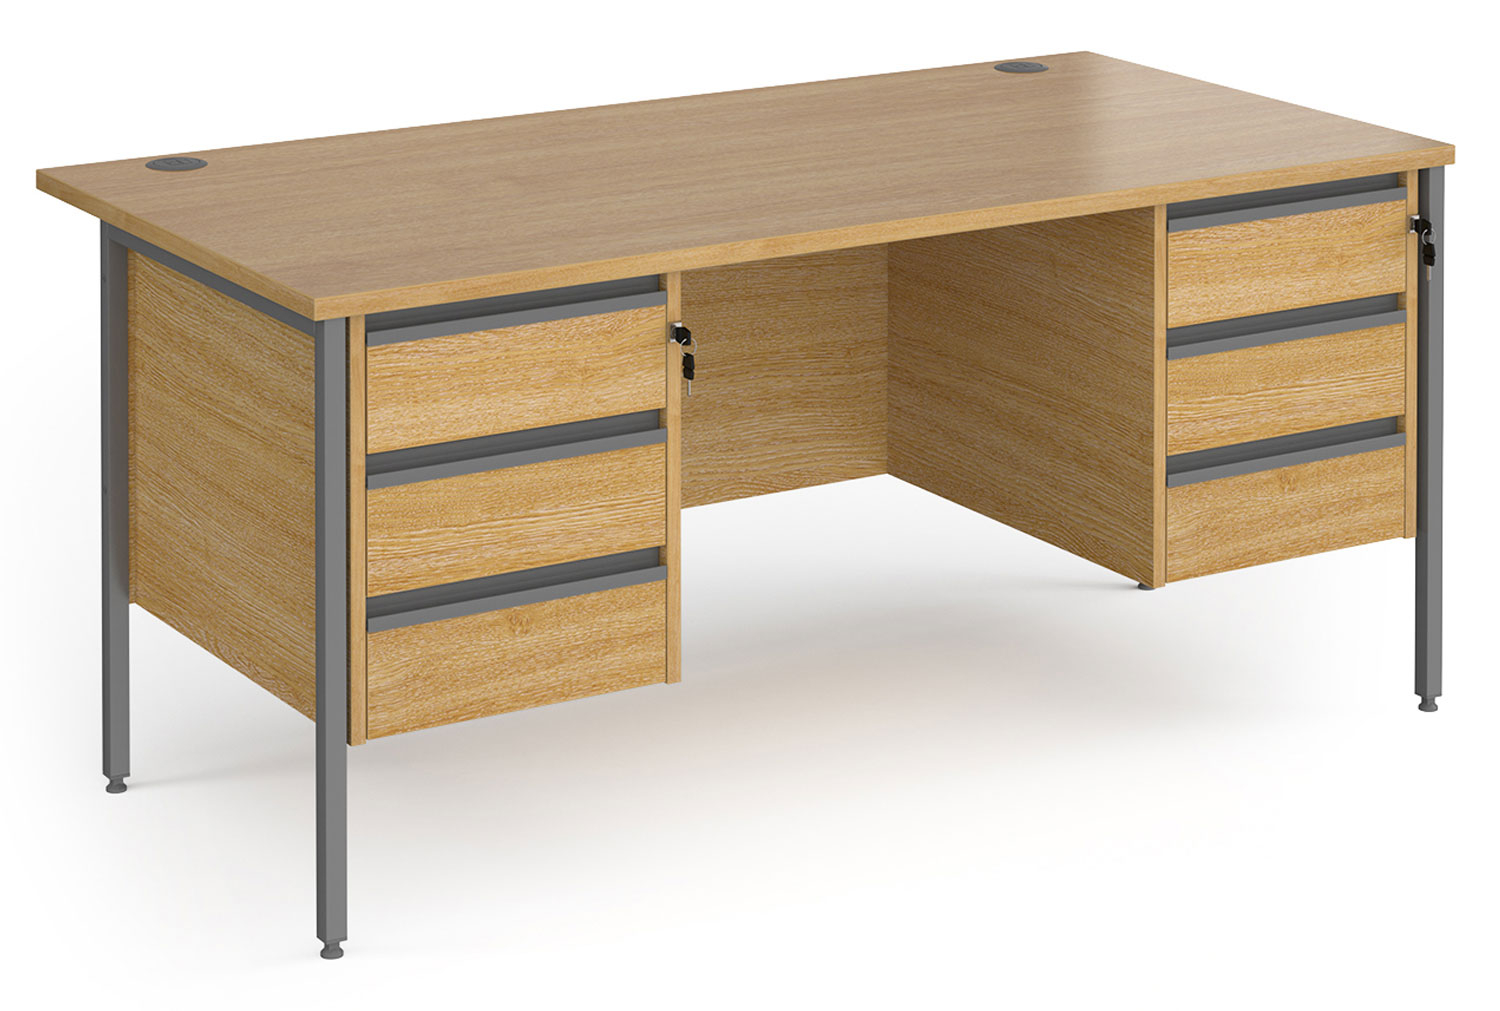 Value Line Classic+ Rectangular H-Leg Office Desk 3+3 Drawers (Graphite Leg), 160wx80dx73h (cm), Oak, Express Delivery